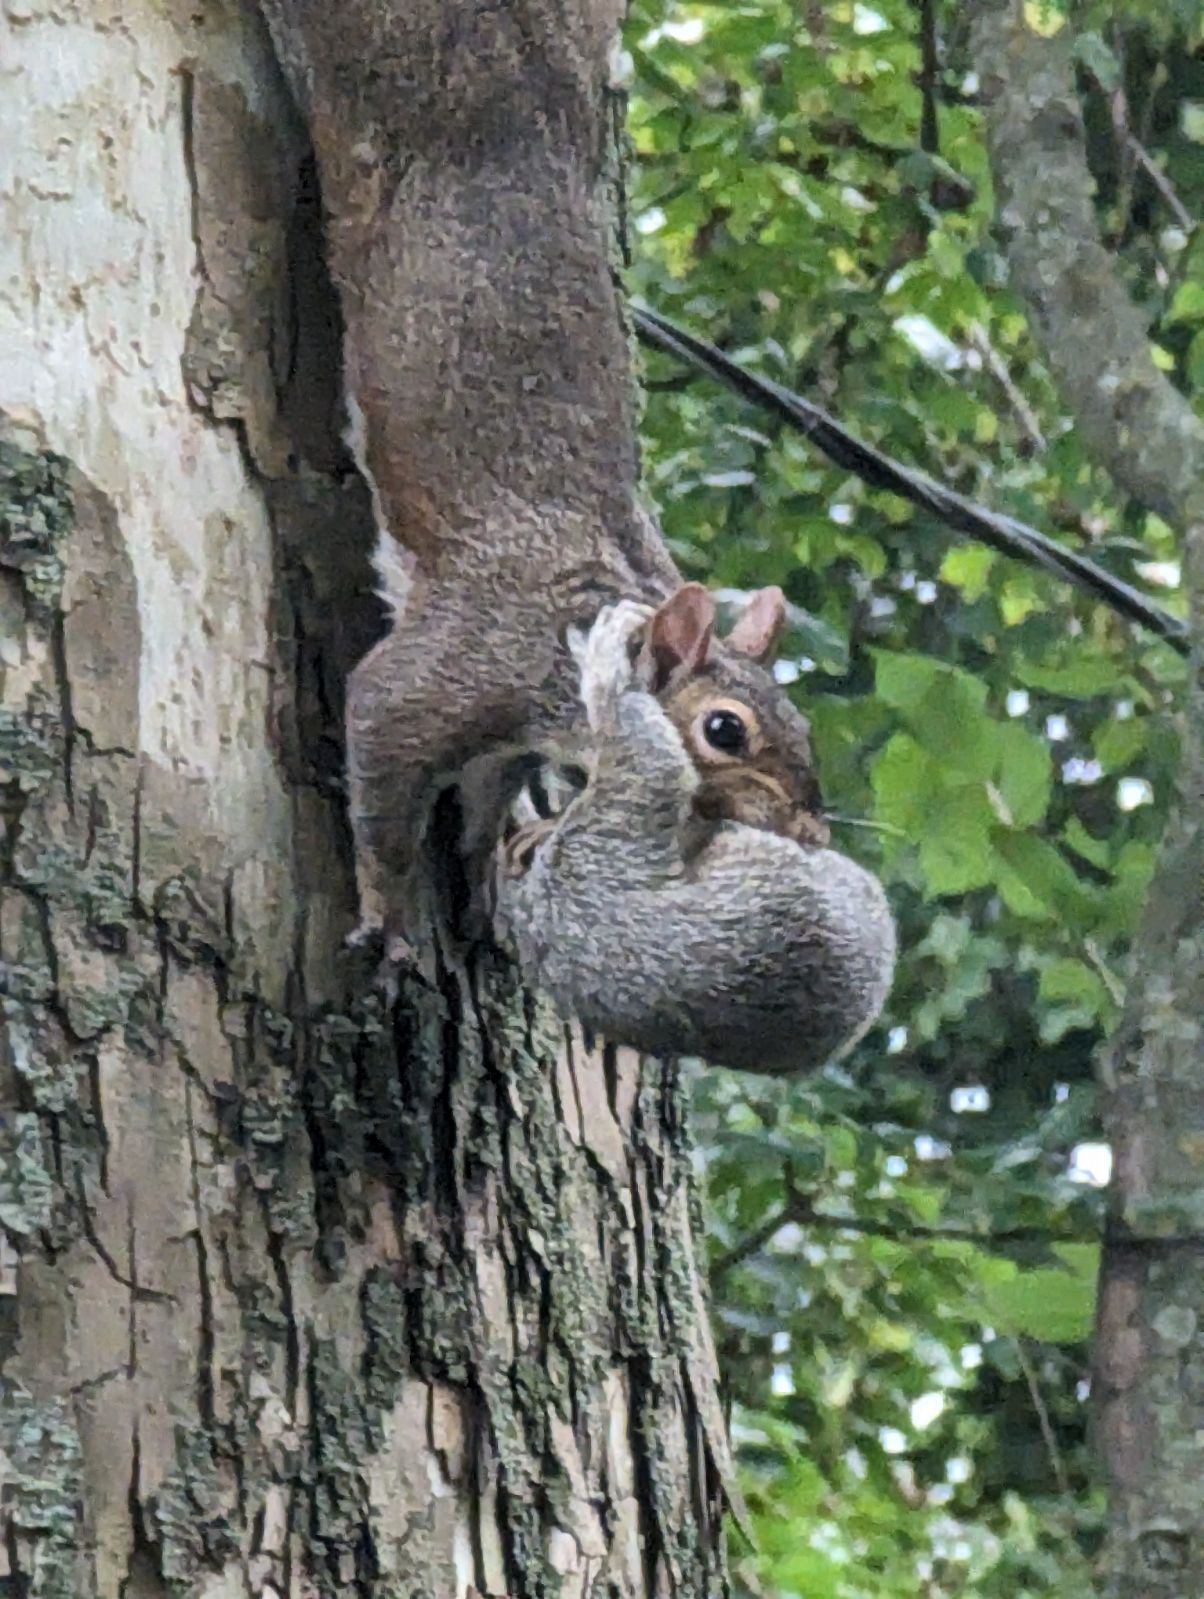 It's a squirrel eat squirrel world